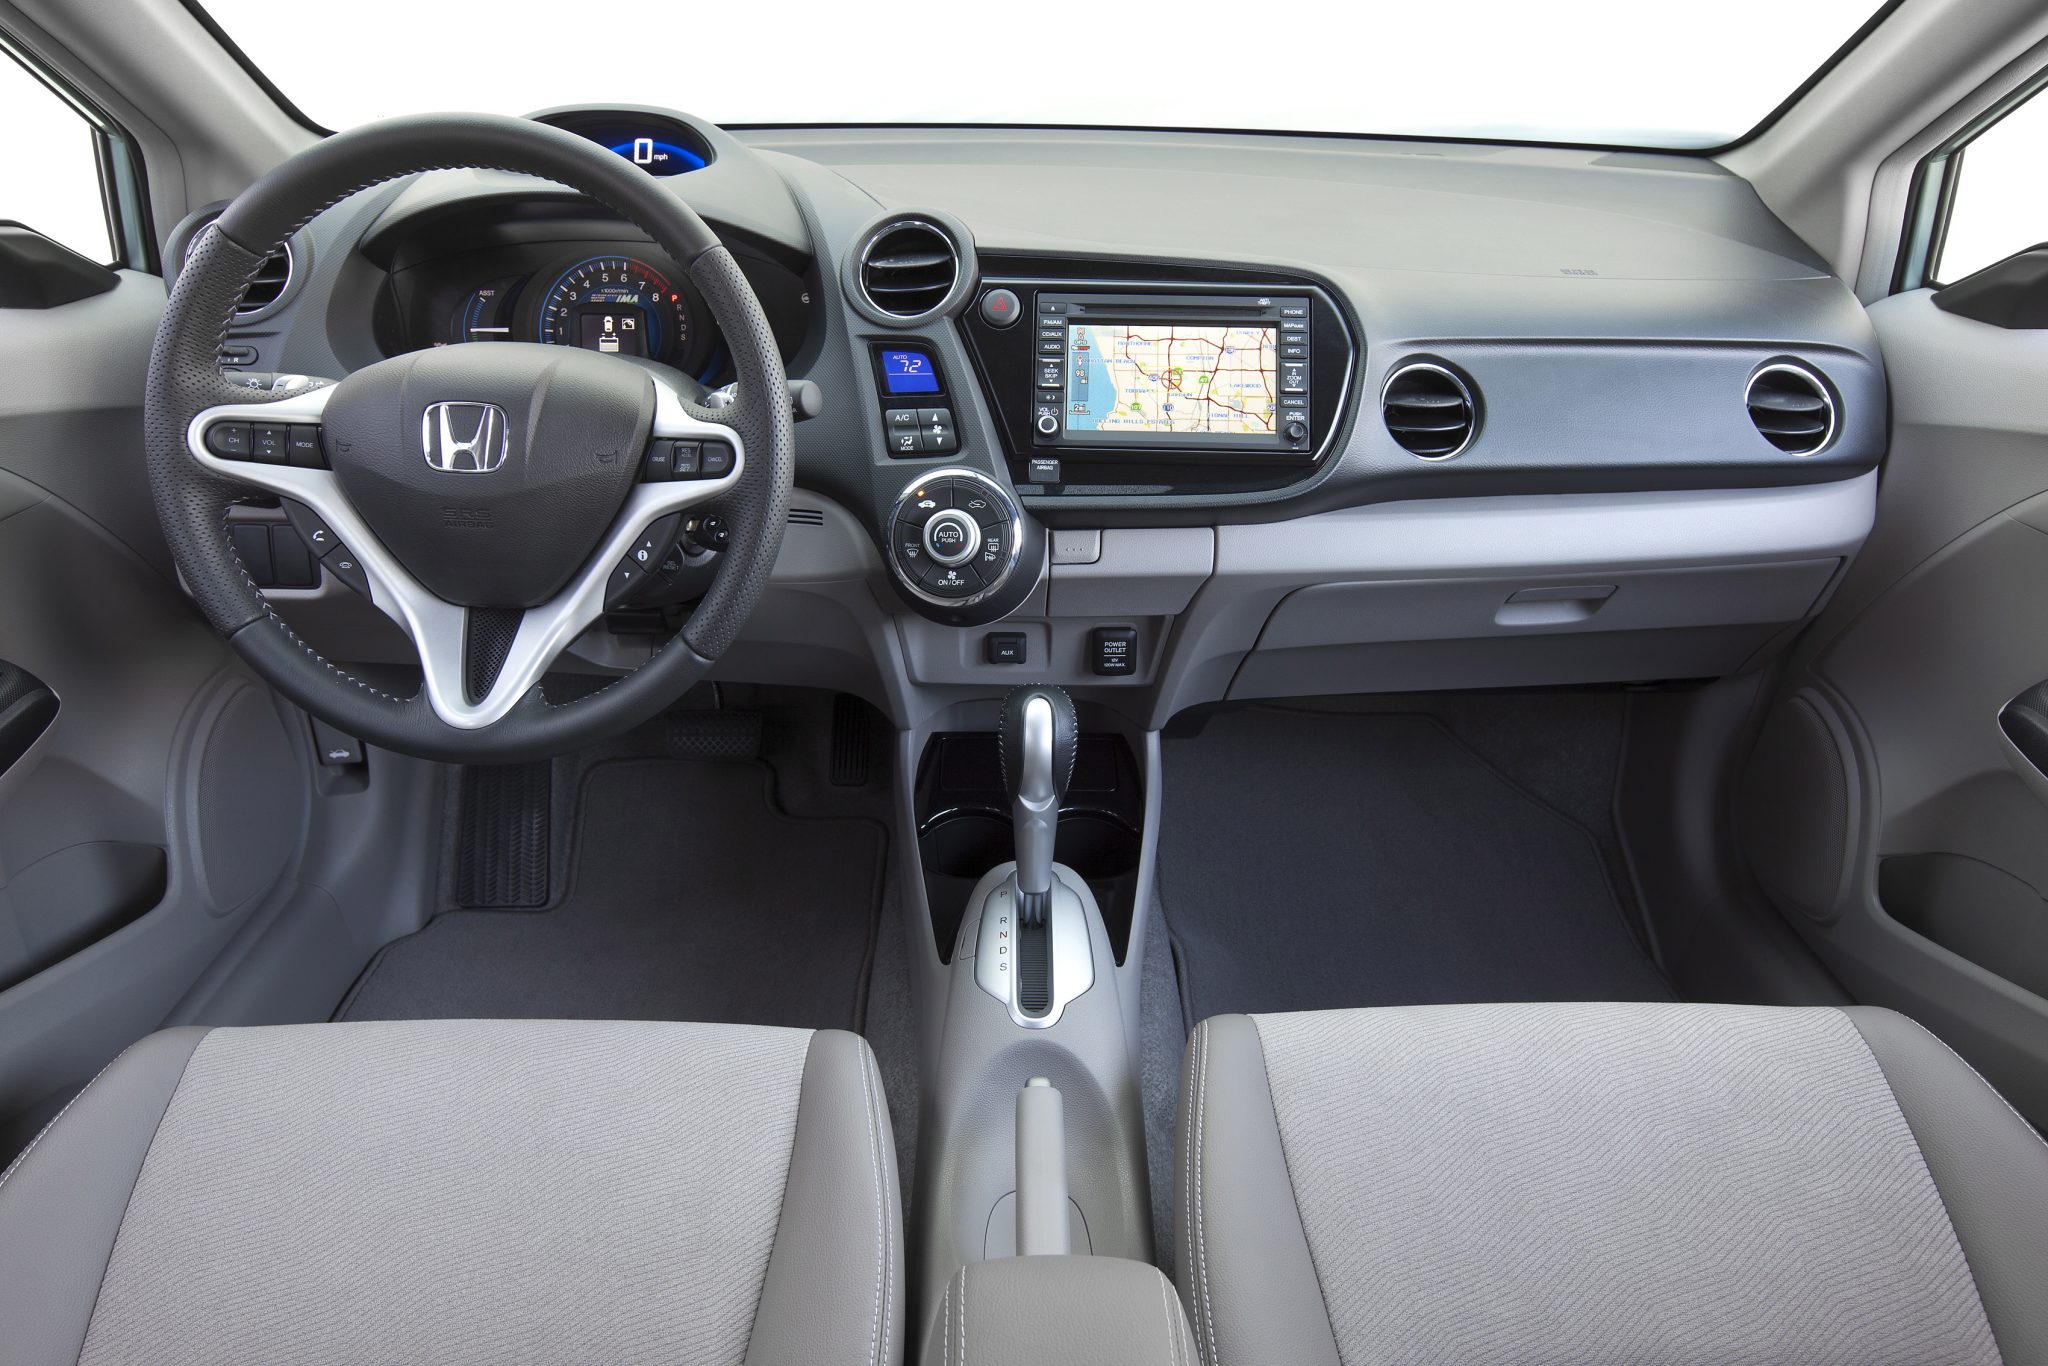 2013 Honda Insight Overview